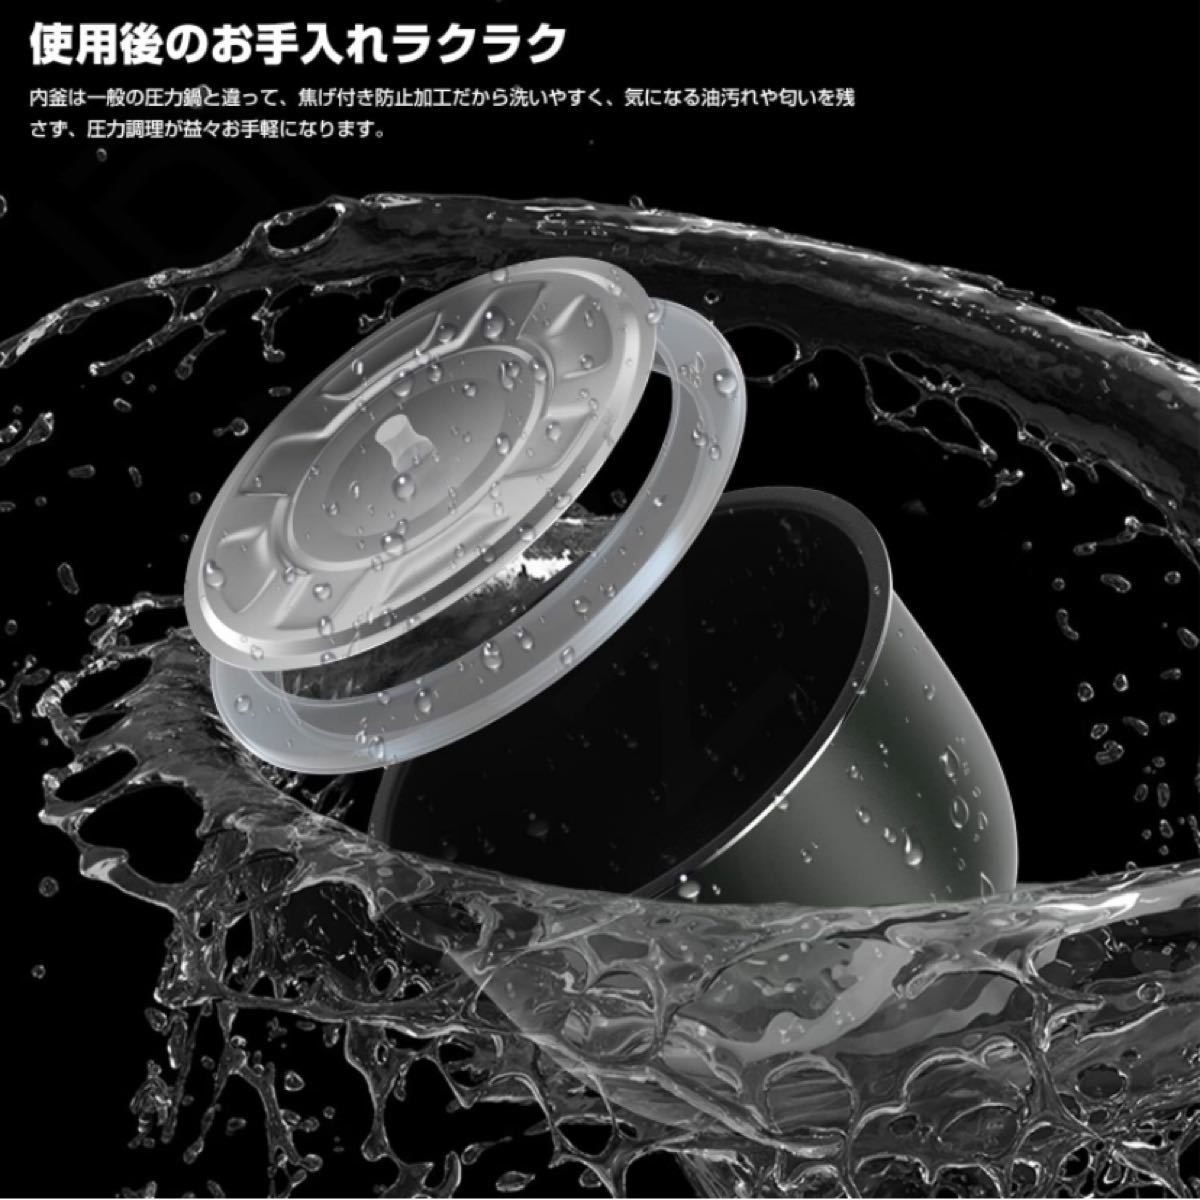 【新品】AONCIA 電気圧力鍋 3L 圧力鍋 炊飯器 保温機能付き ブラック色